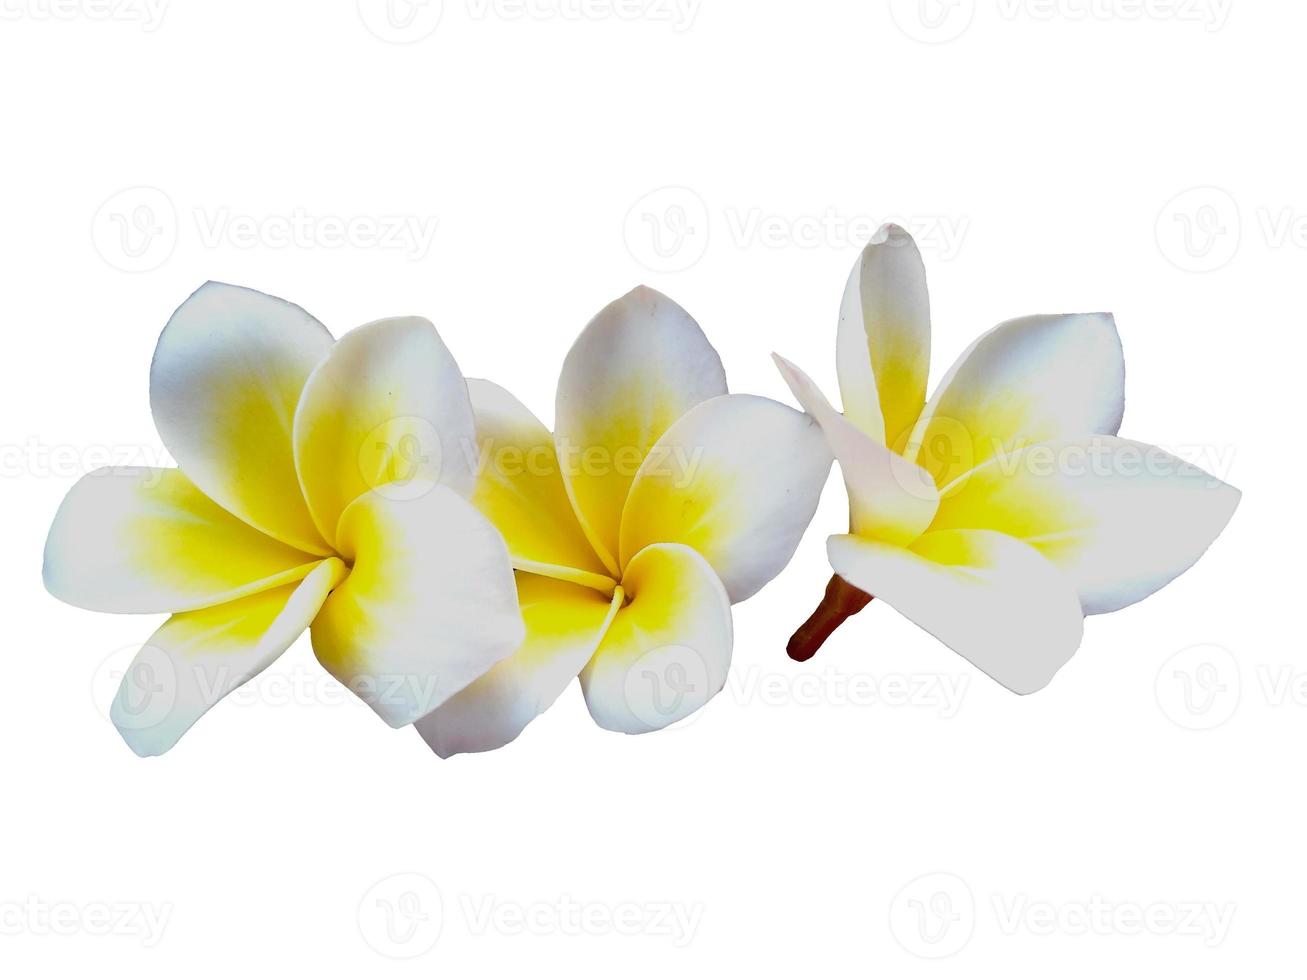 vit plumeria eller frangipani blomma isolerad på vit bakgrund foto